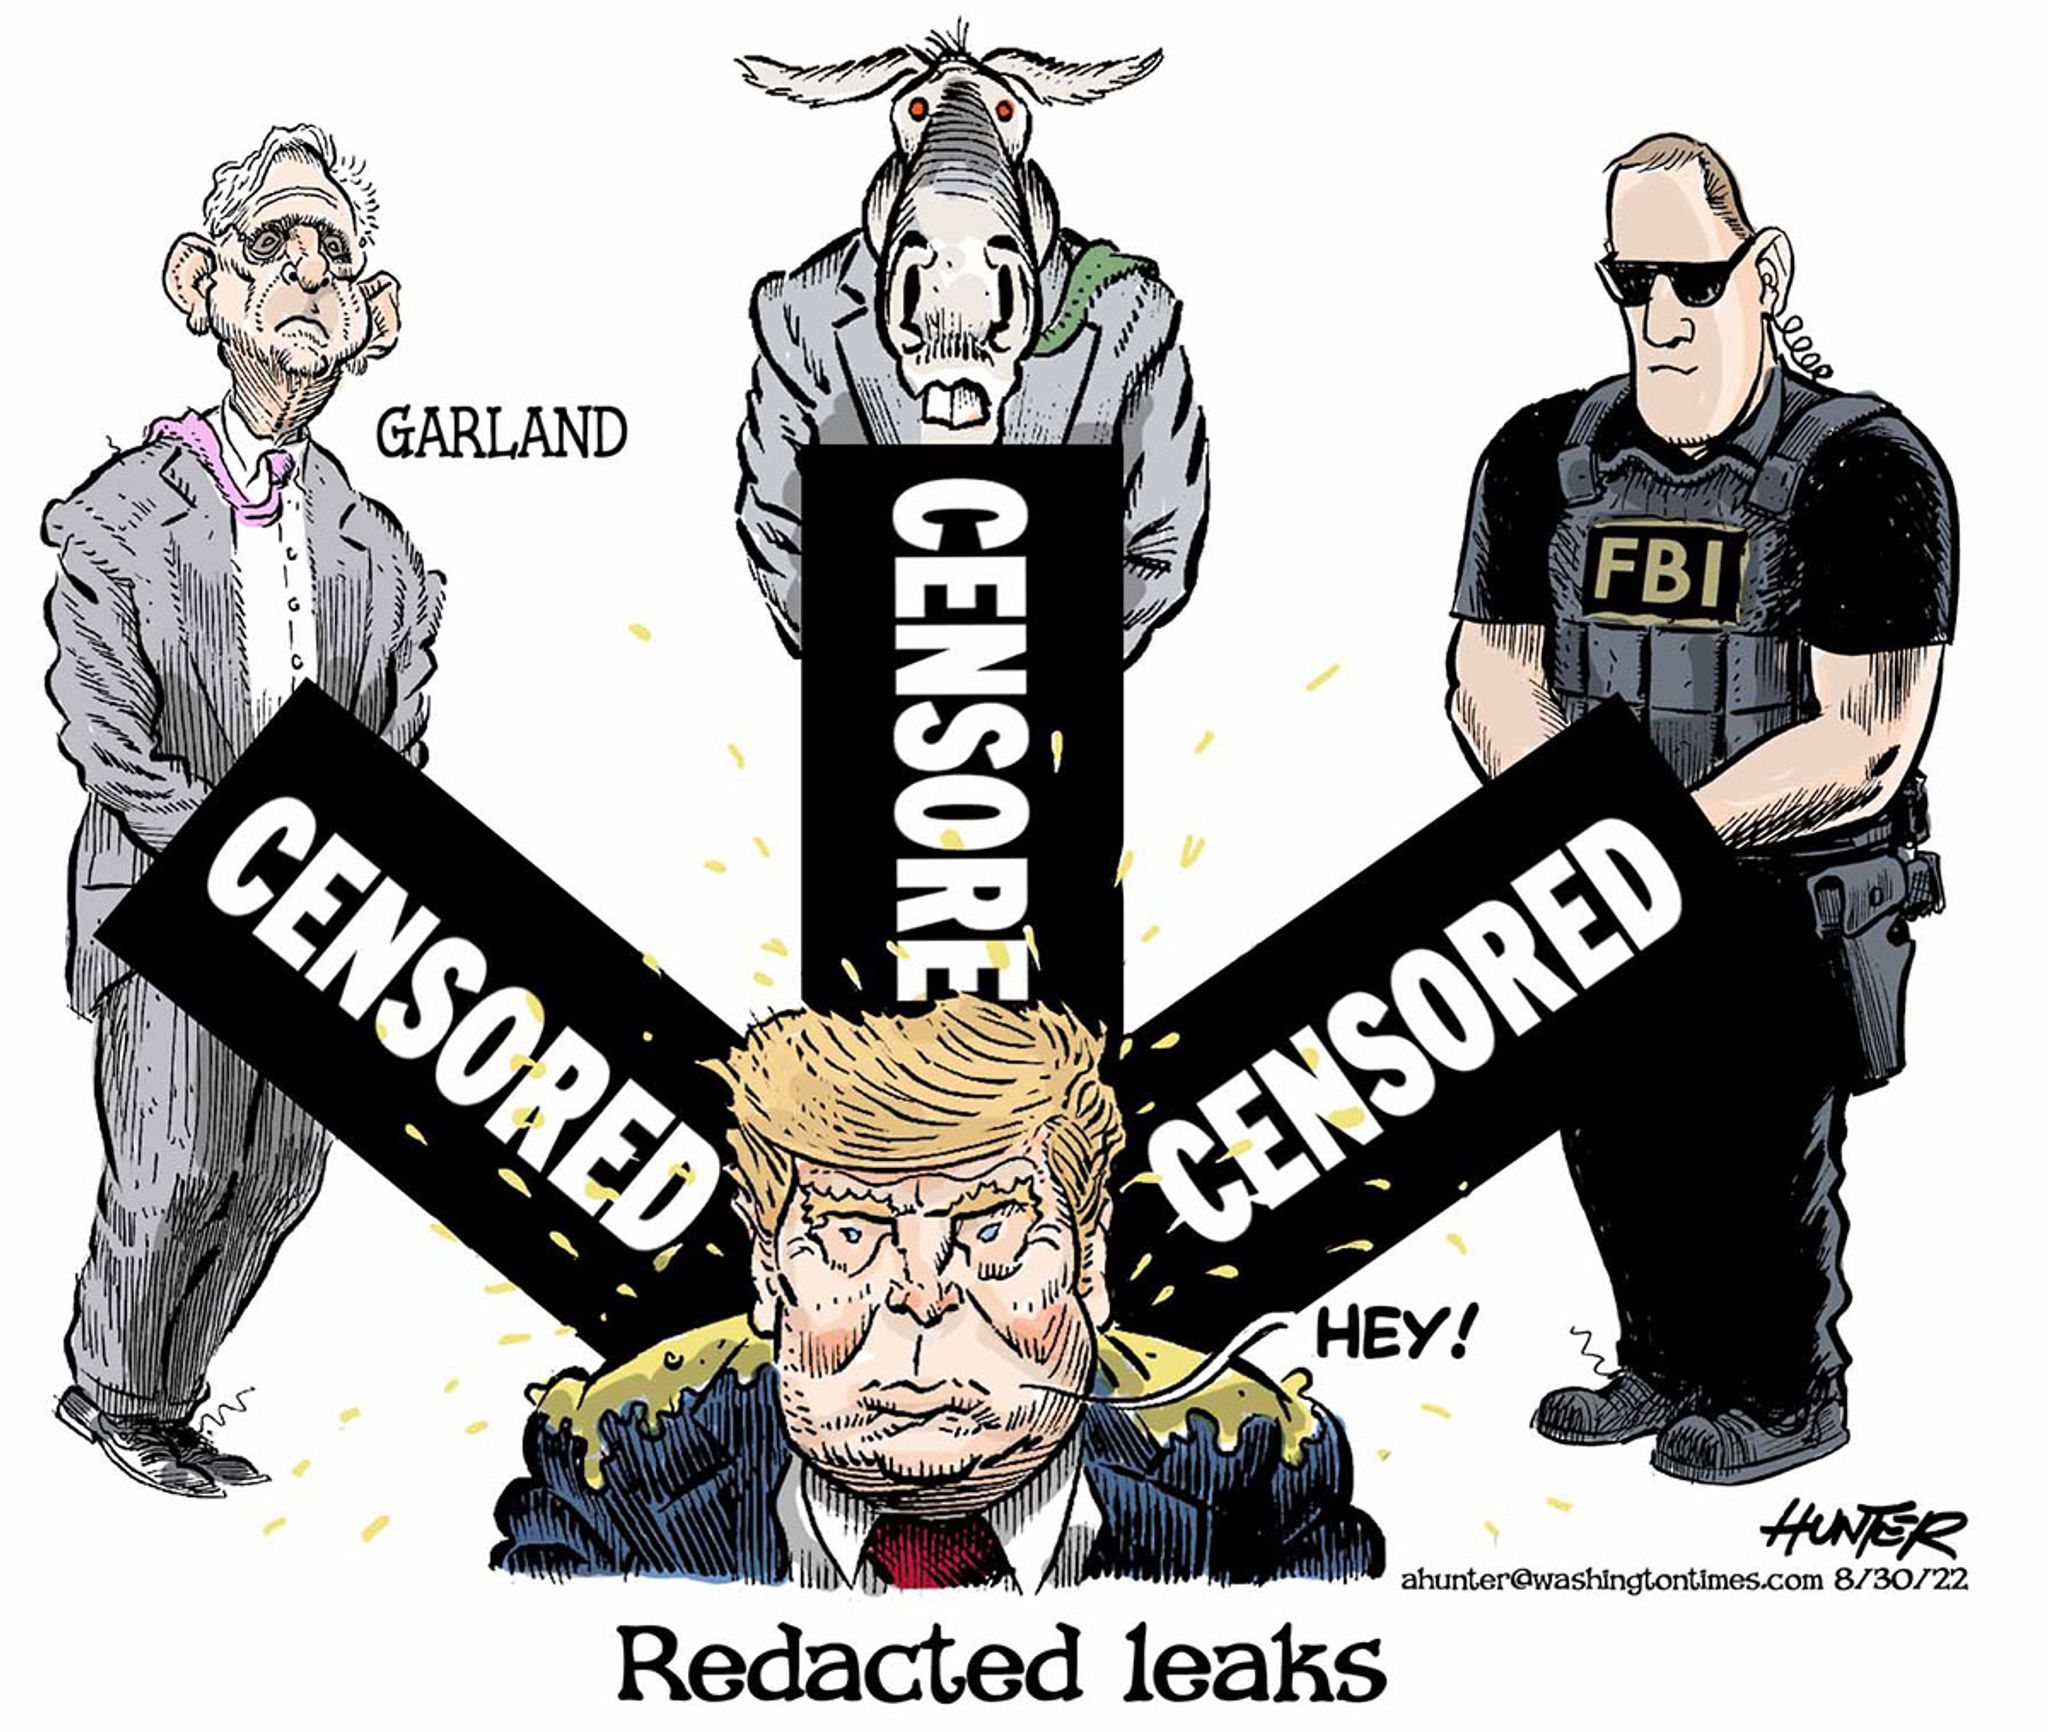 Political Cartoons - Tooning into President Trump - Redacted leaks -  Washington Times